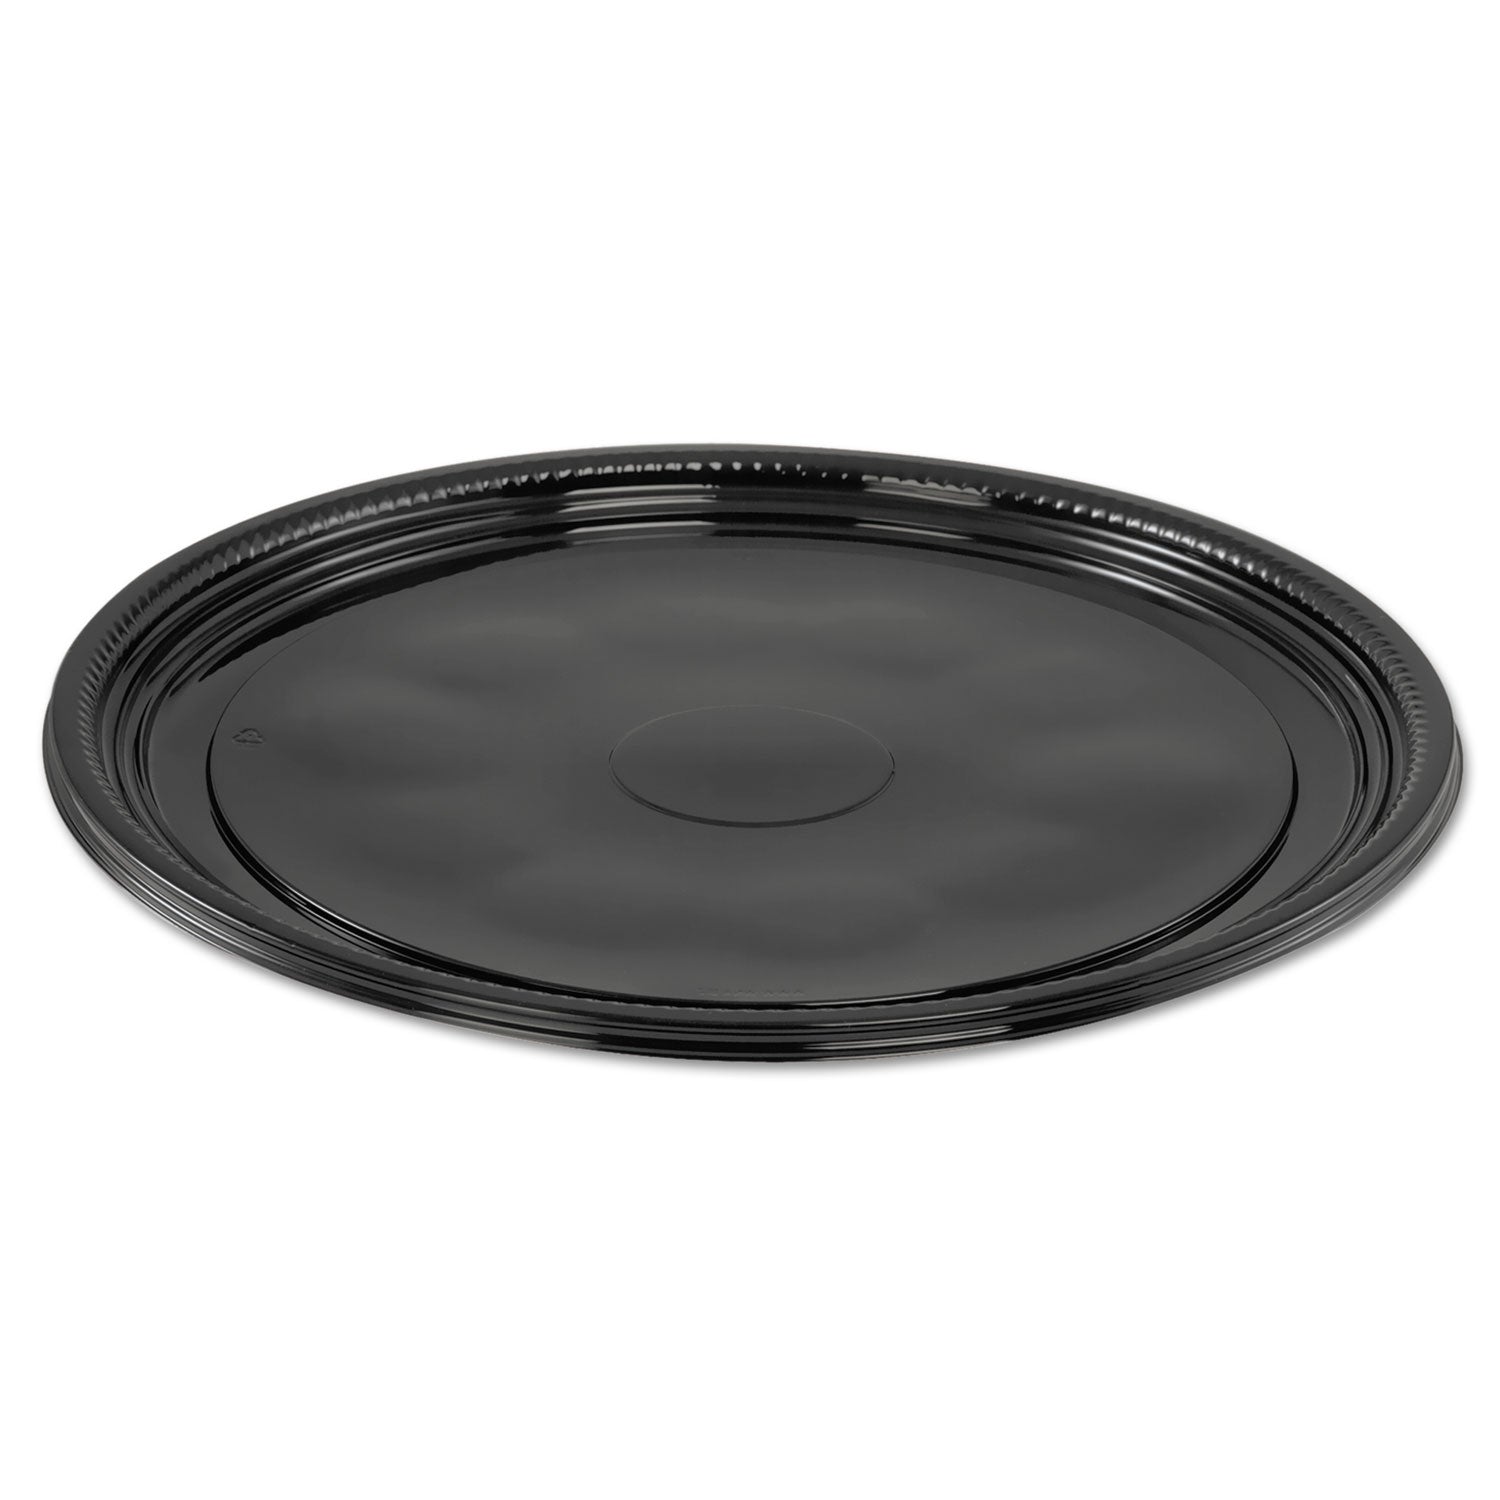 Caterline Casuals Thermoformed Platters, 12" Diameter, Black. Plastic, 25/Carton - 